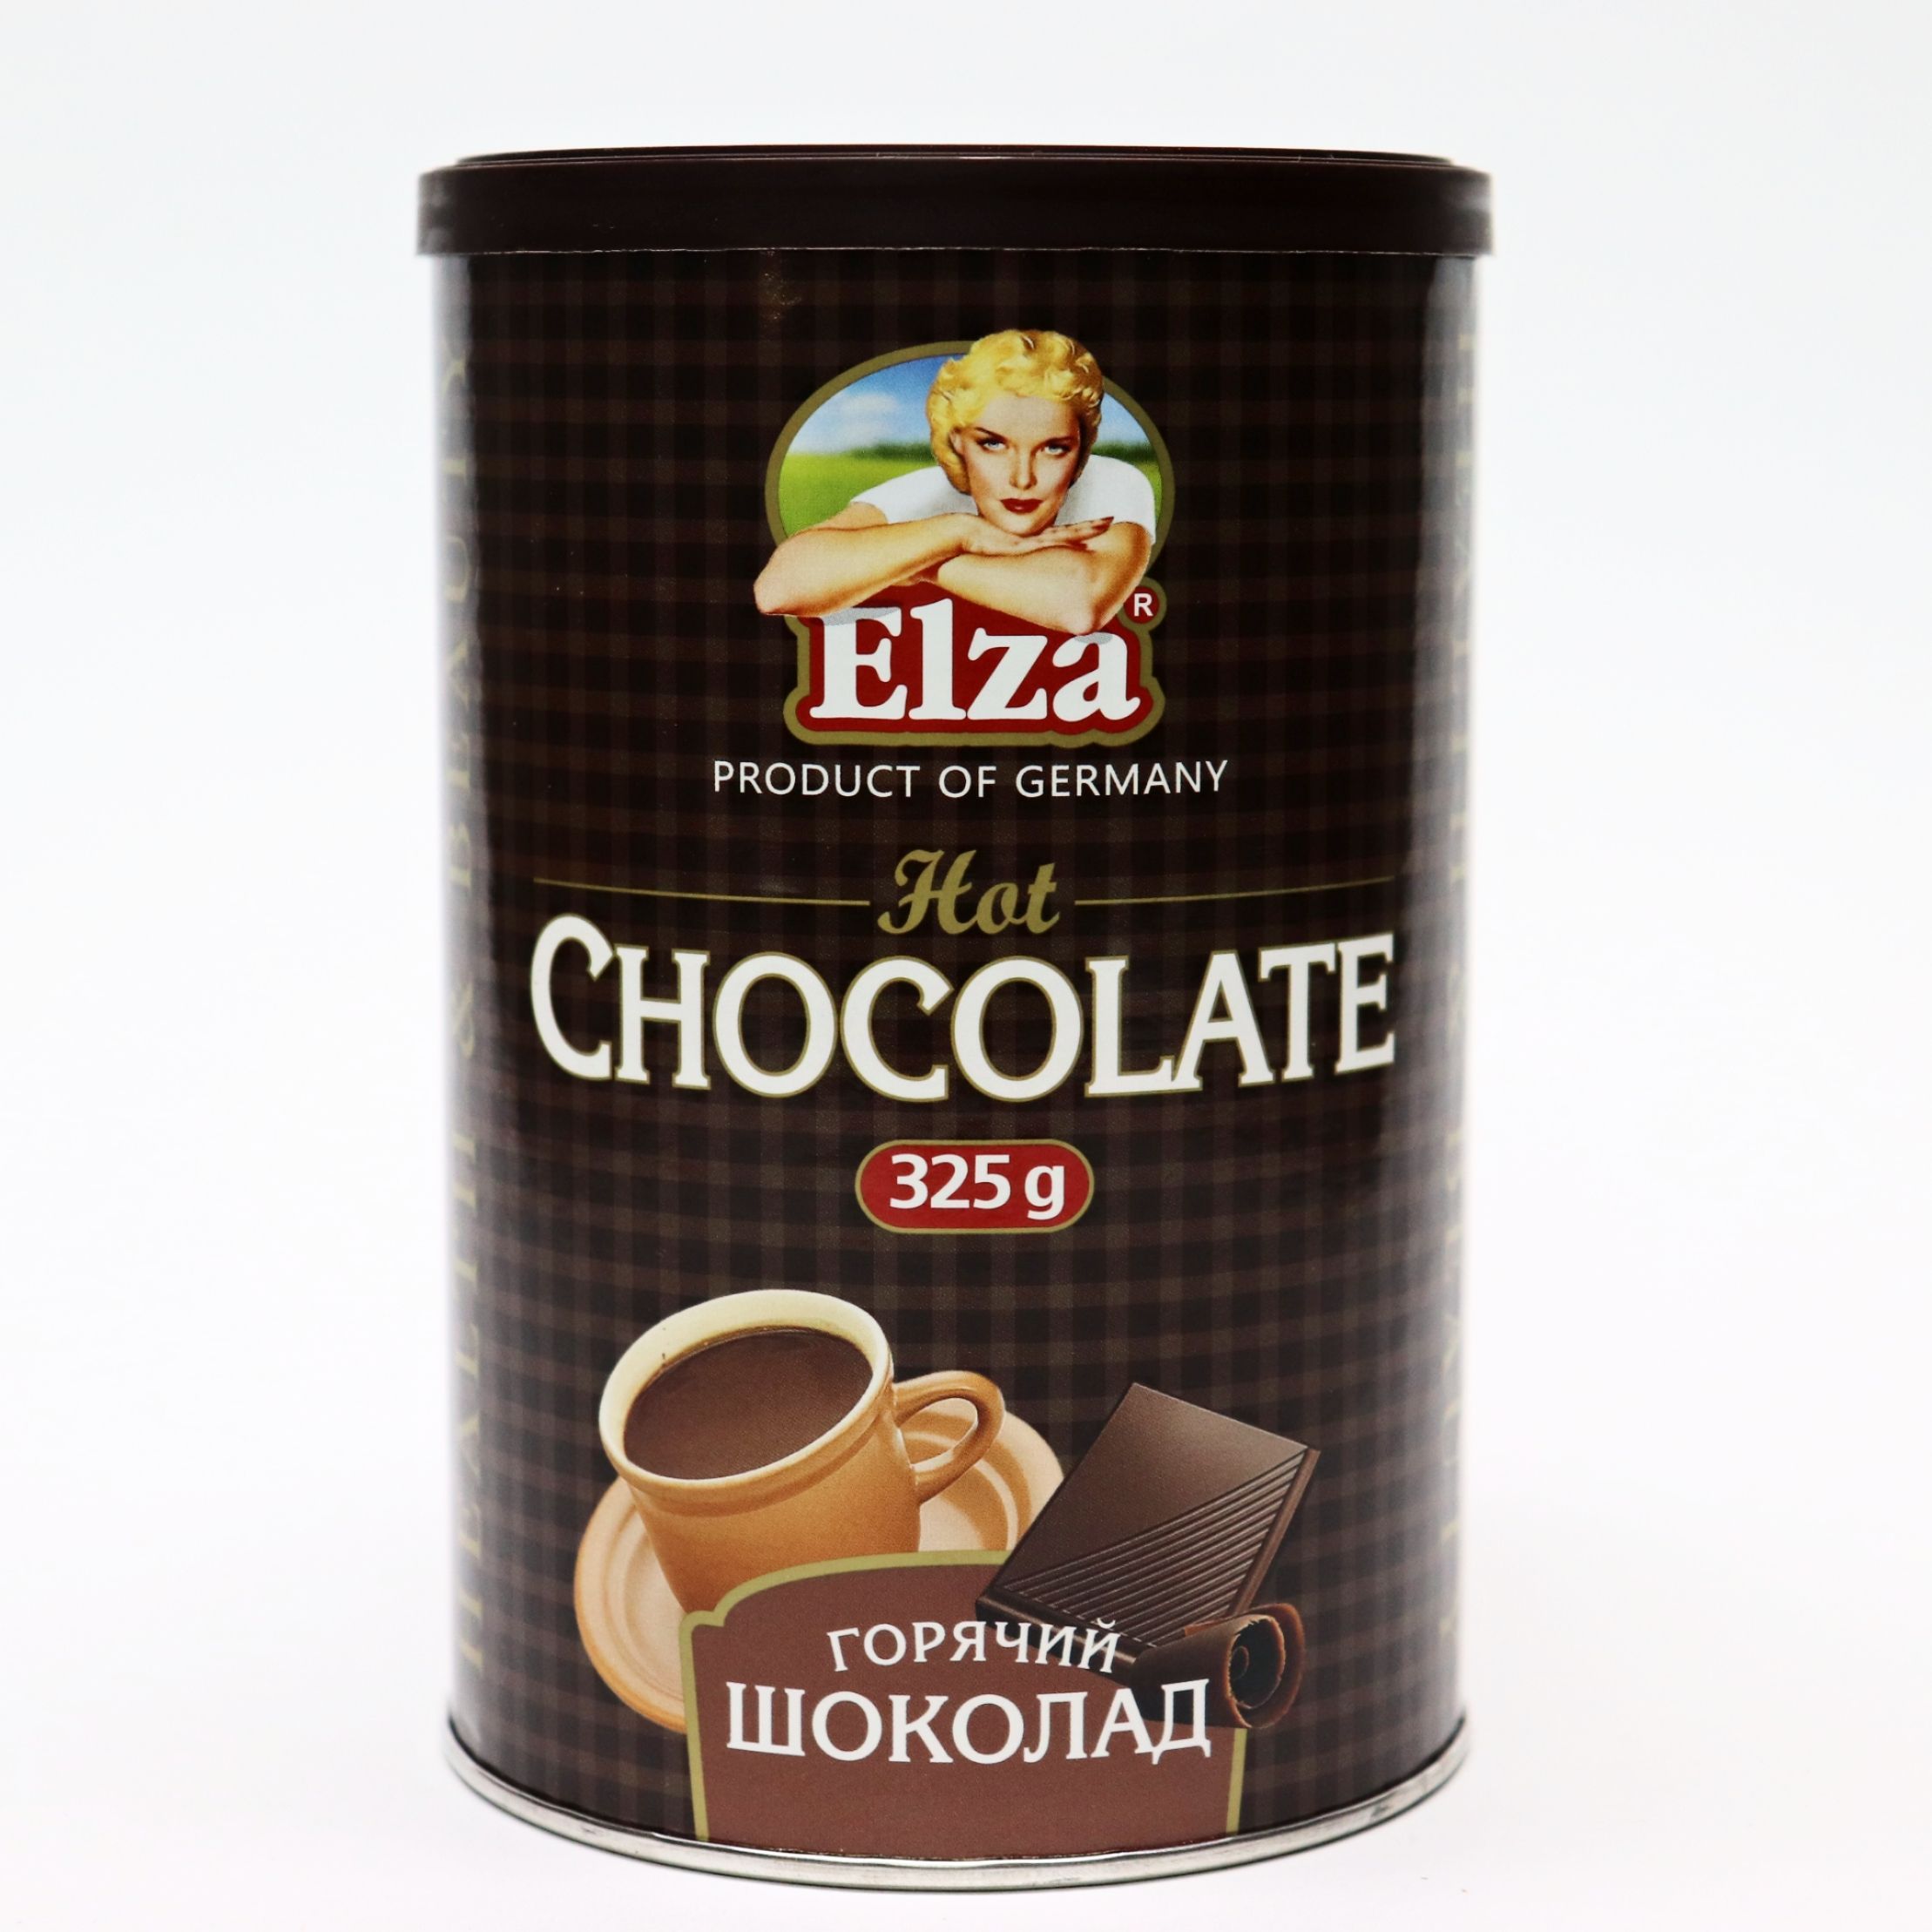 Горячий шоколад растворимый Elza Choco Band. Горячий шоколад Elza, 325 гр. Горячий шоколад elza